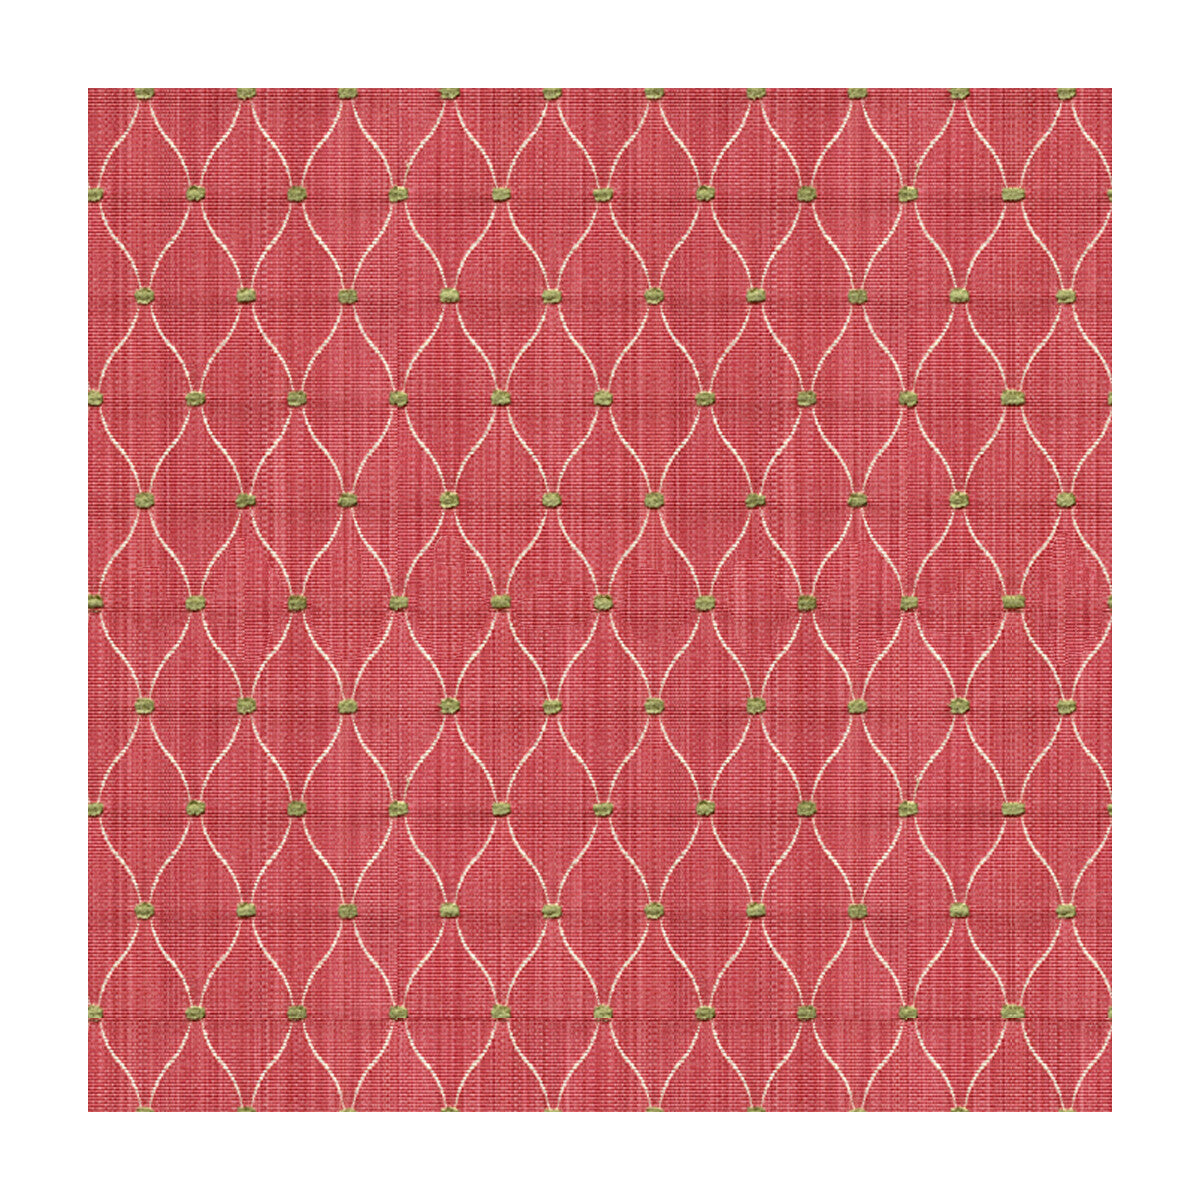 Kravet Smart fabric in 31137-319 color - pattern 31137.319.0 - by Kravet Smart